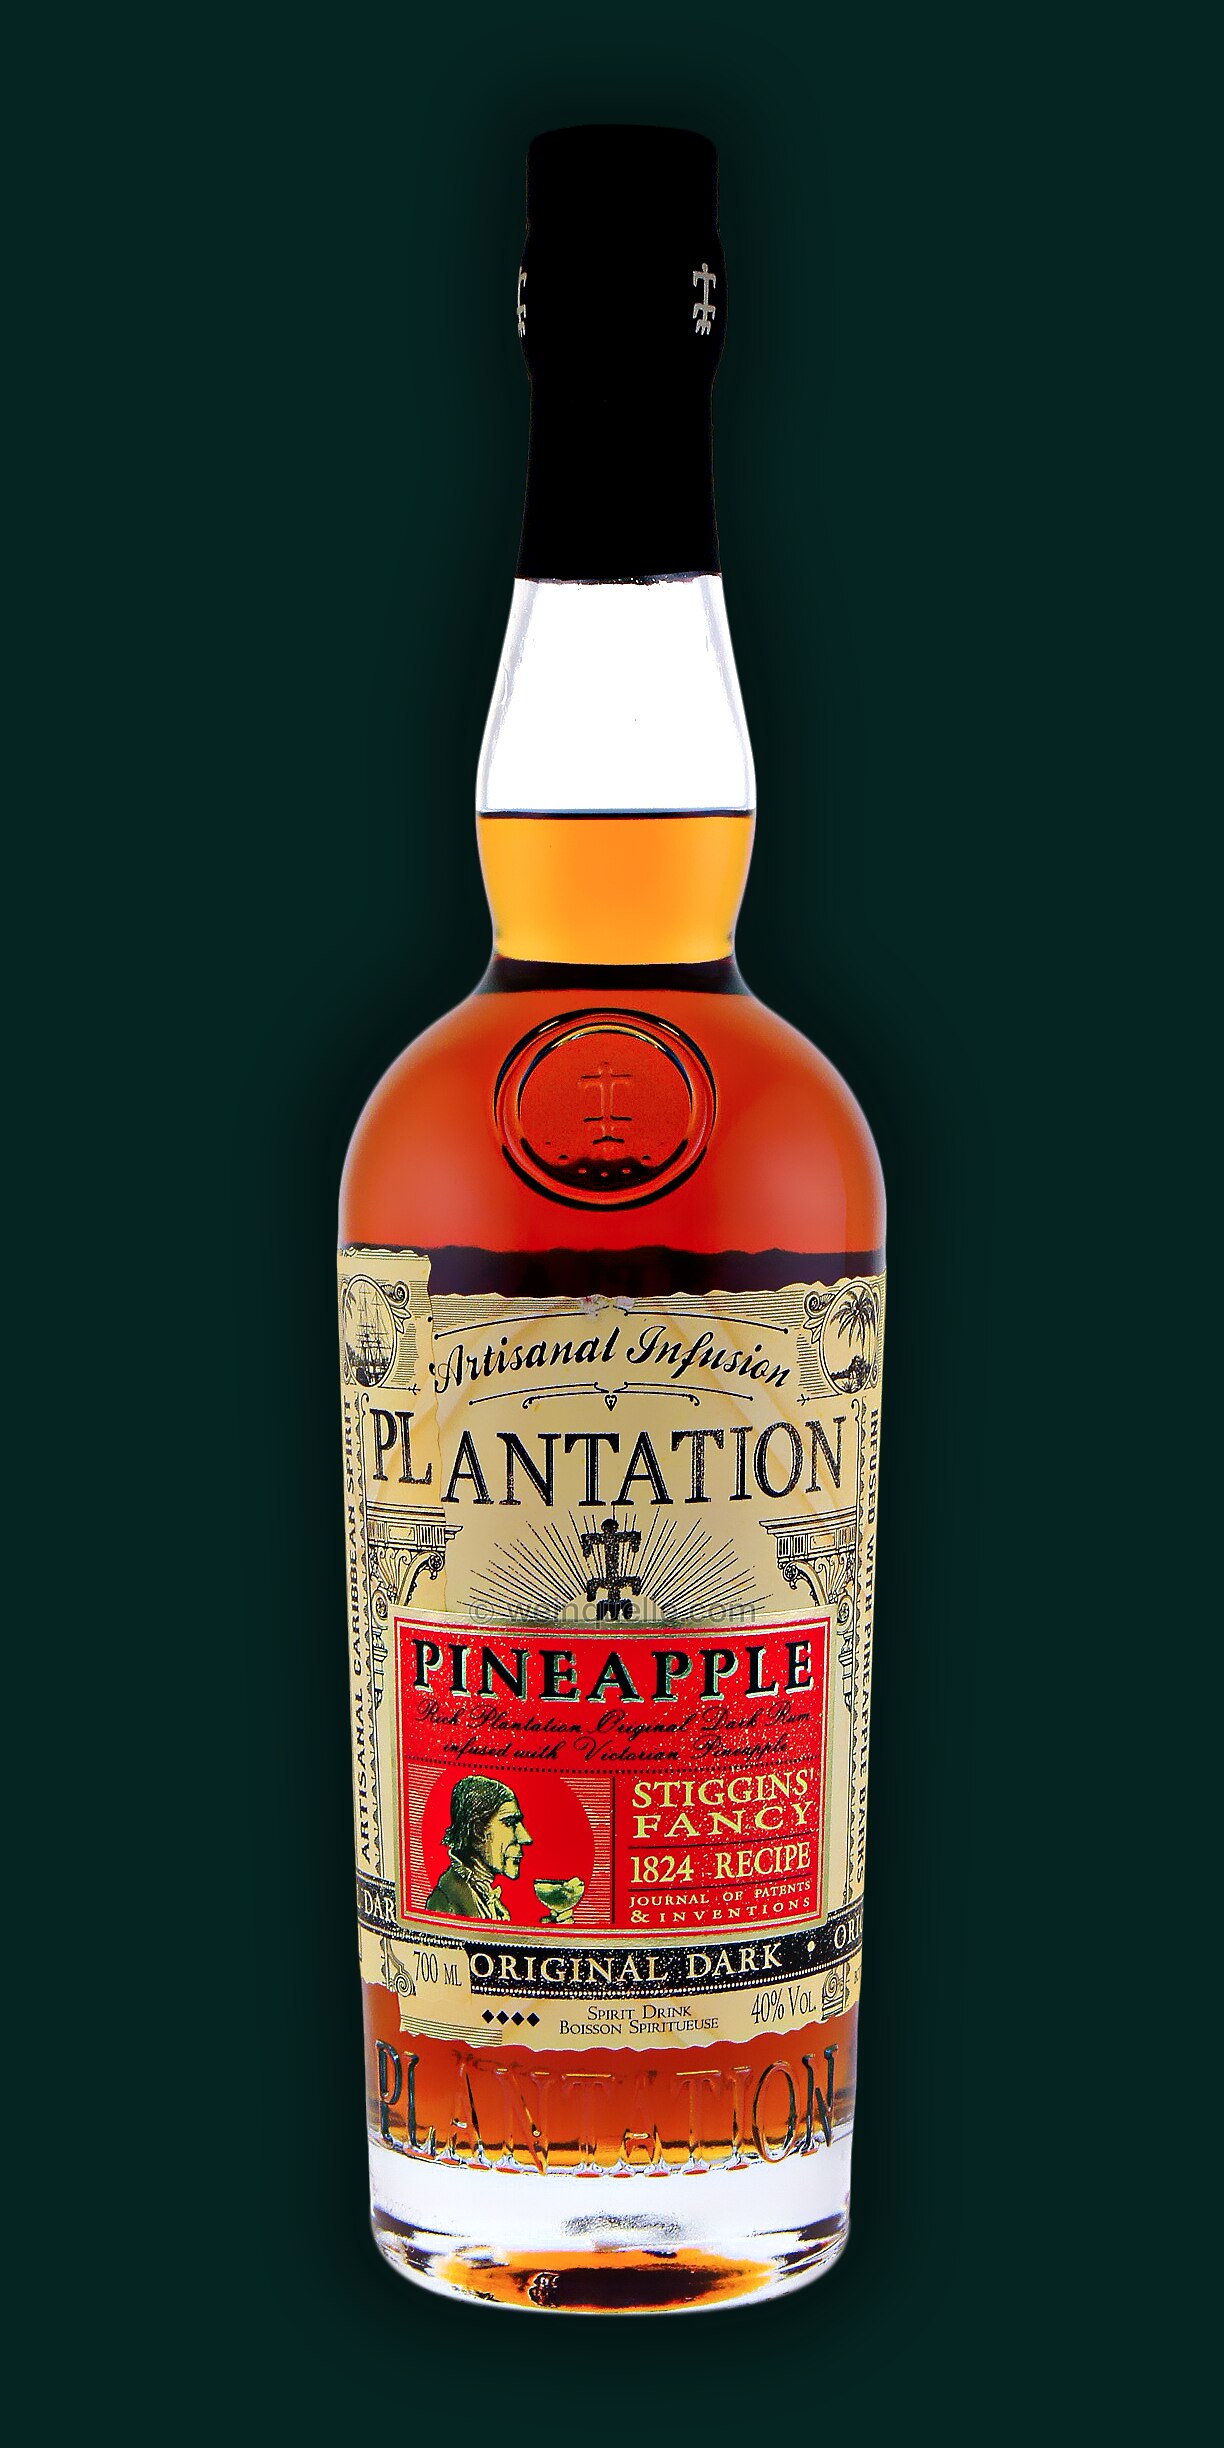 Plantation Pineapple Stiggins Weinquelle - 24,90 Lühmann Fancy, €